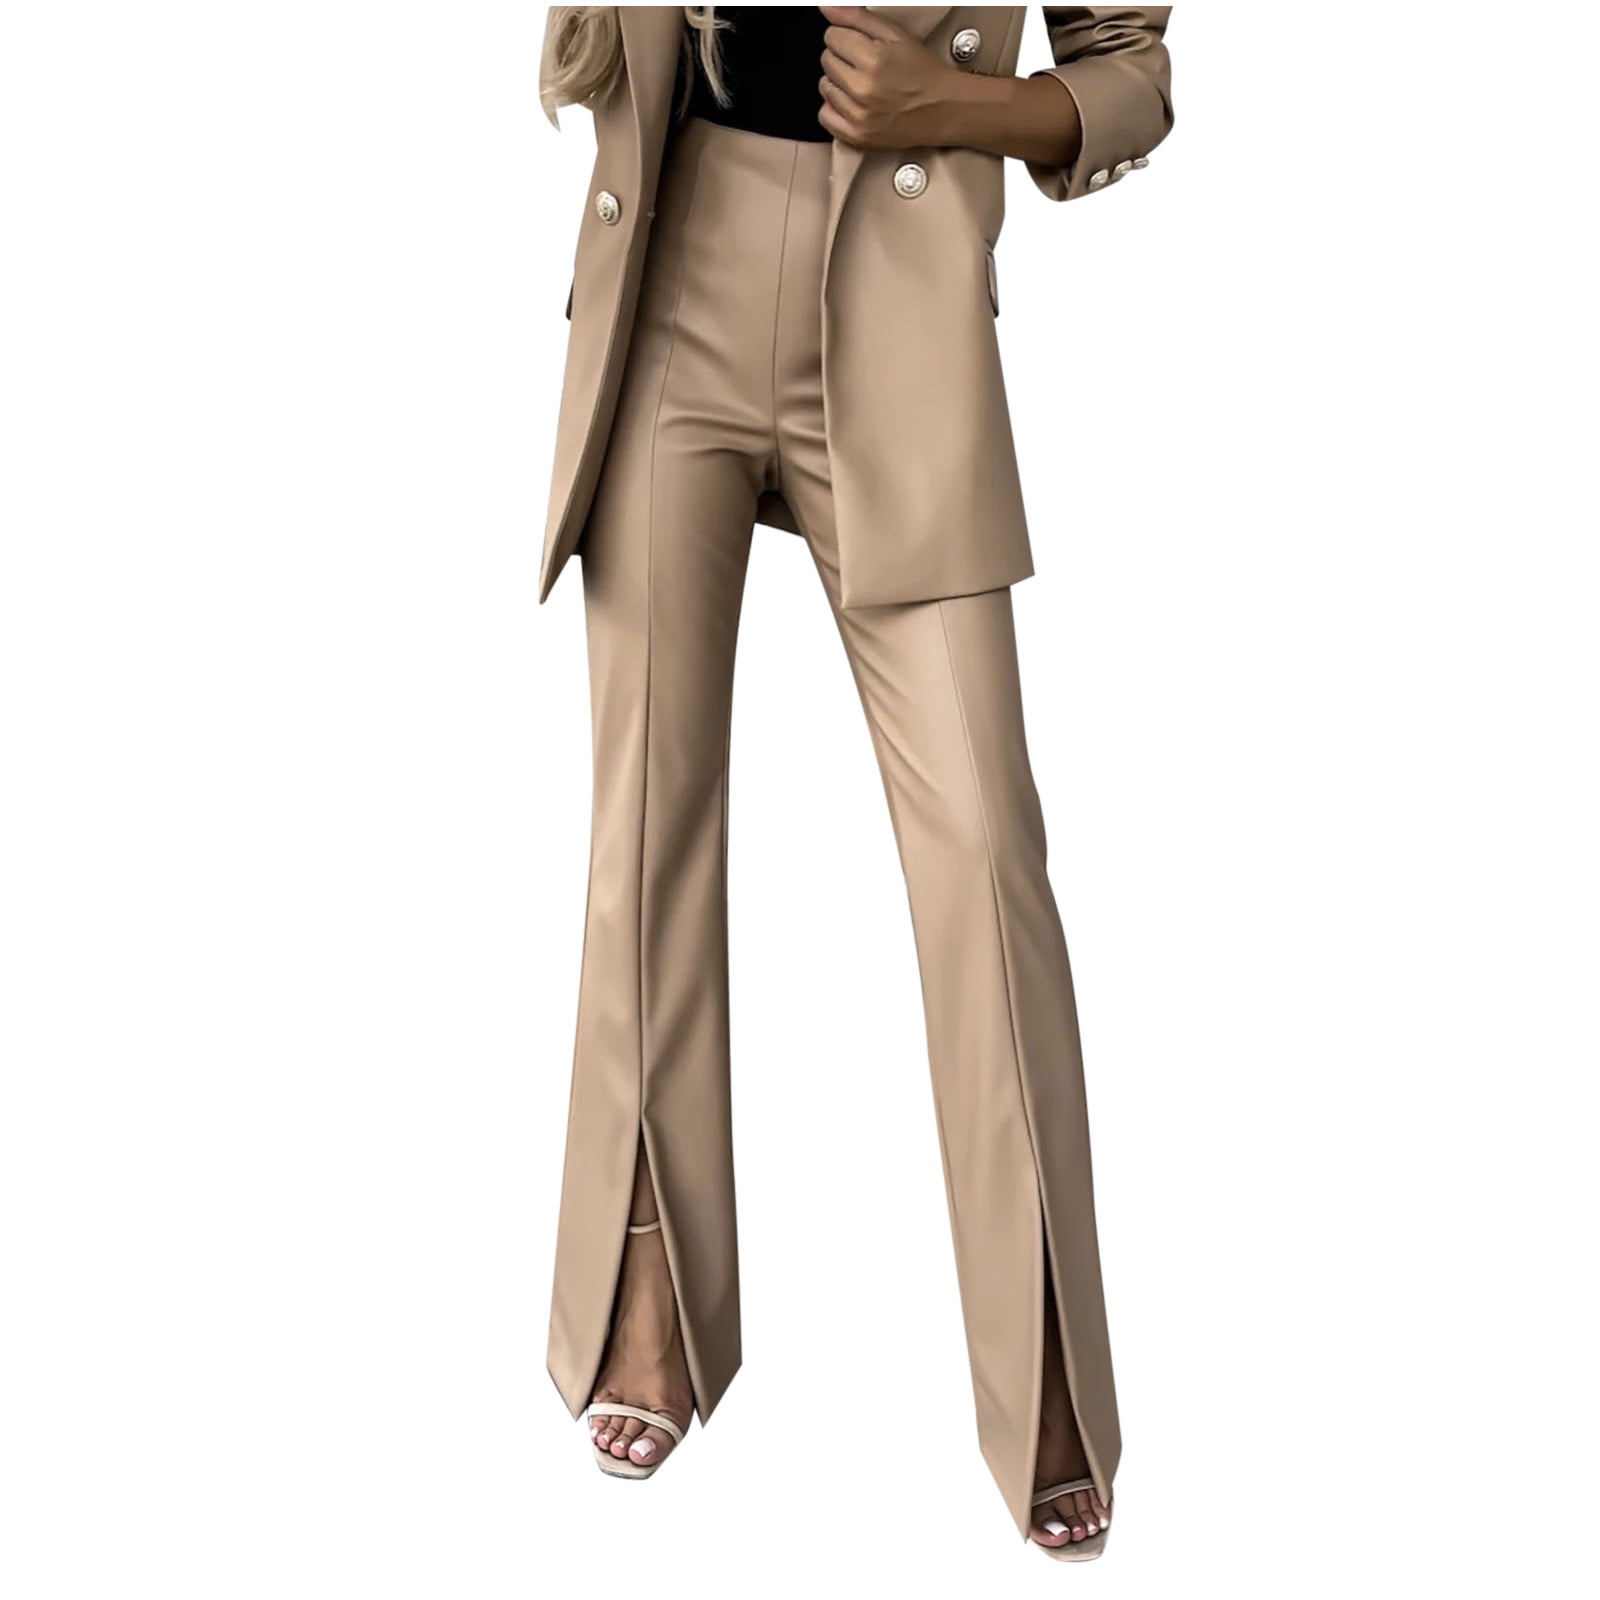 XFLWAM Women's Faux PU Leather High Waist Front Split Hem Flare Pants  Stretchy Bell Bottom Pants with Pockets Khaki S